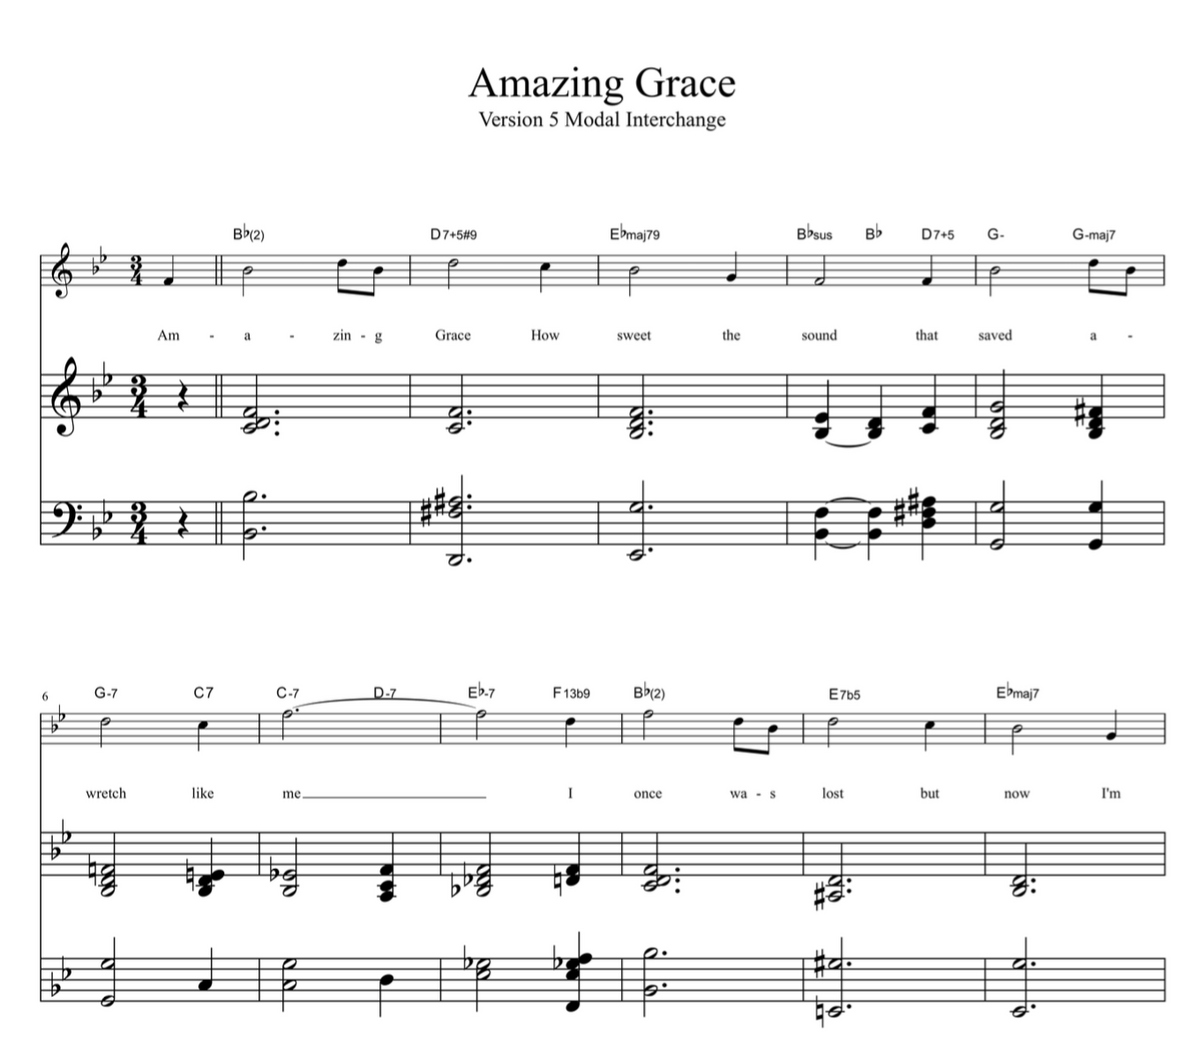 Amazing Grace 6 harmonisations booklet  + Midi  files